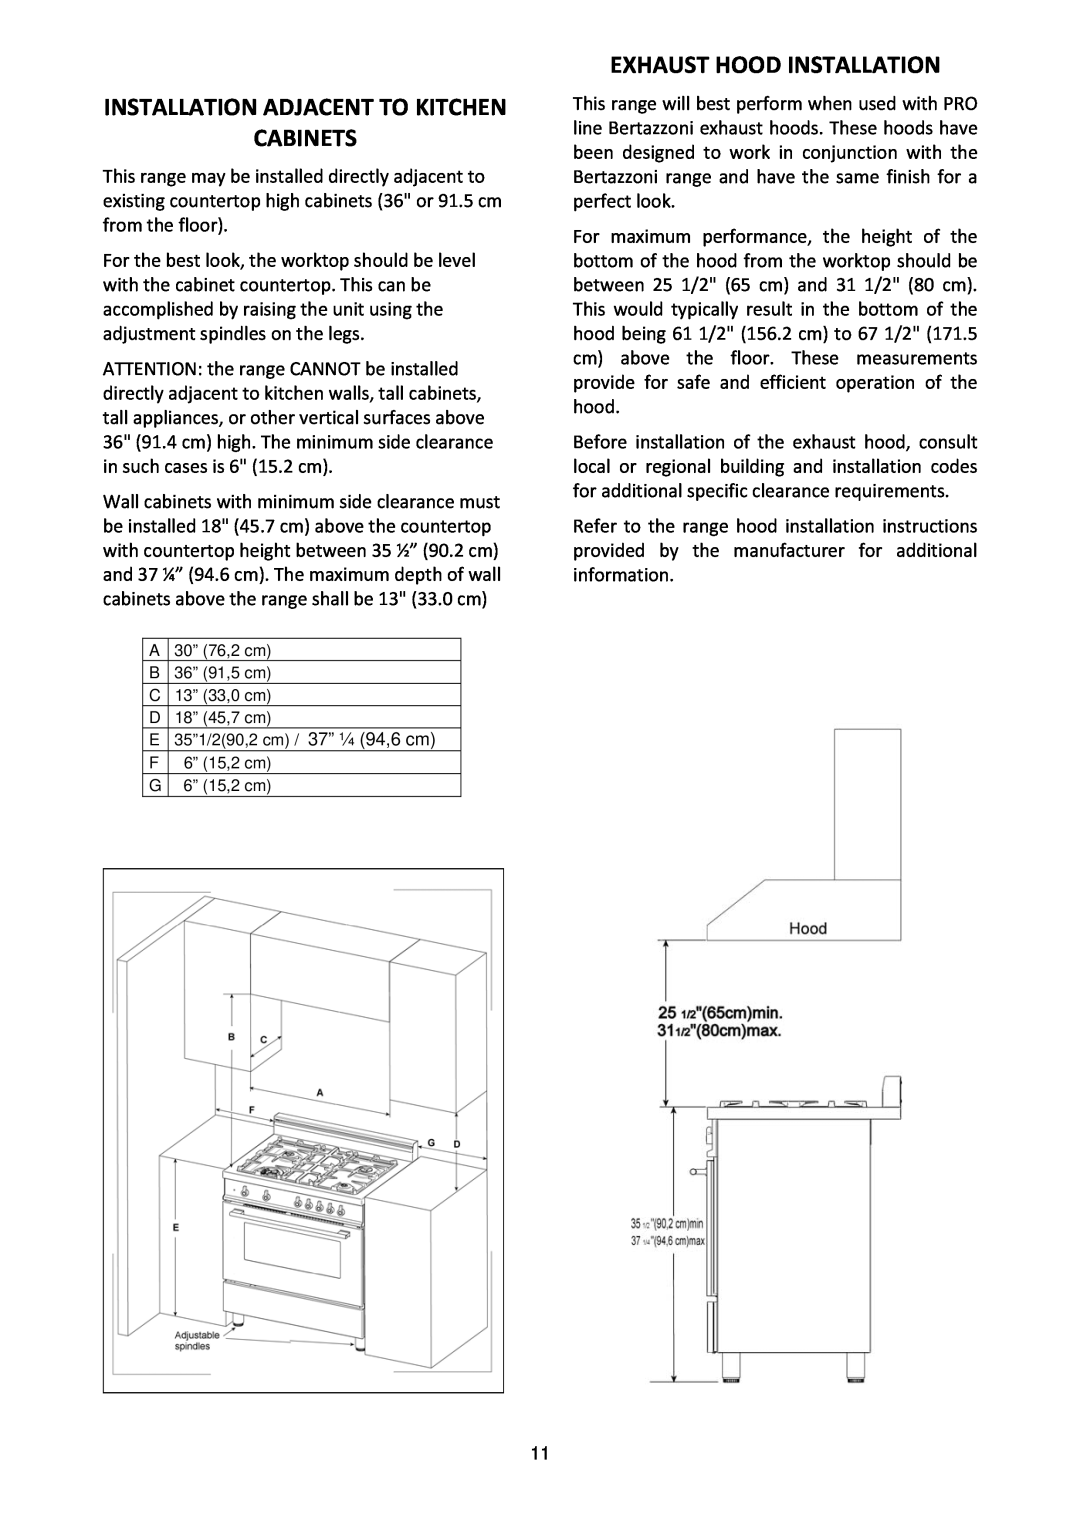 Bertazzoni PRO30 4 GAS RO, PRO30 4 GAS NE manual Installation Adjacent To Kitchen Cabinets, Exhaust Hood Installation 